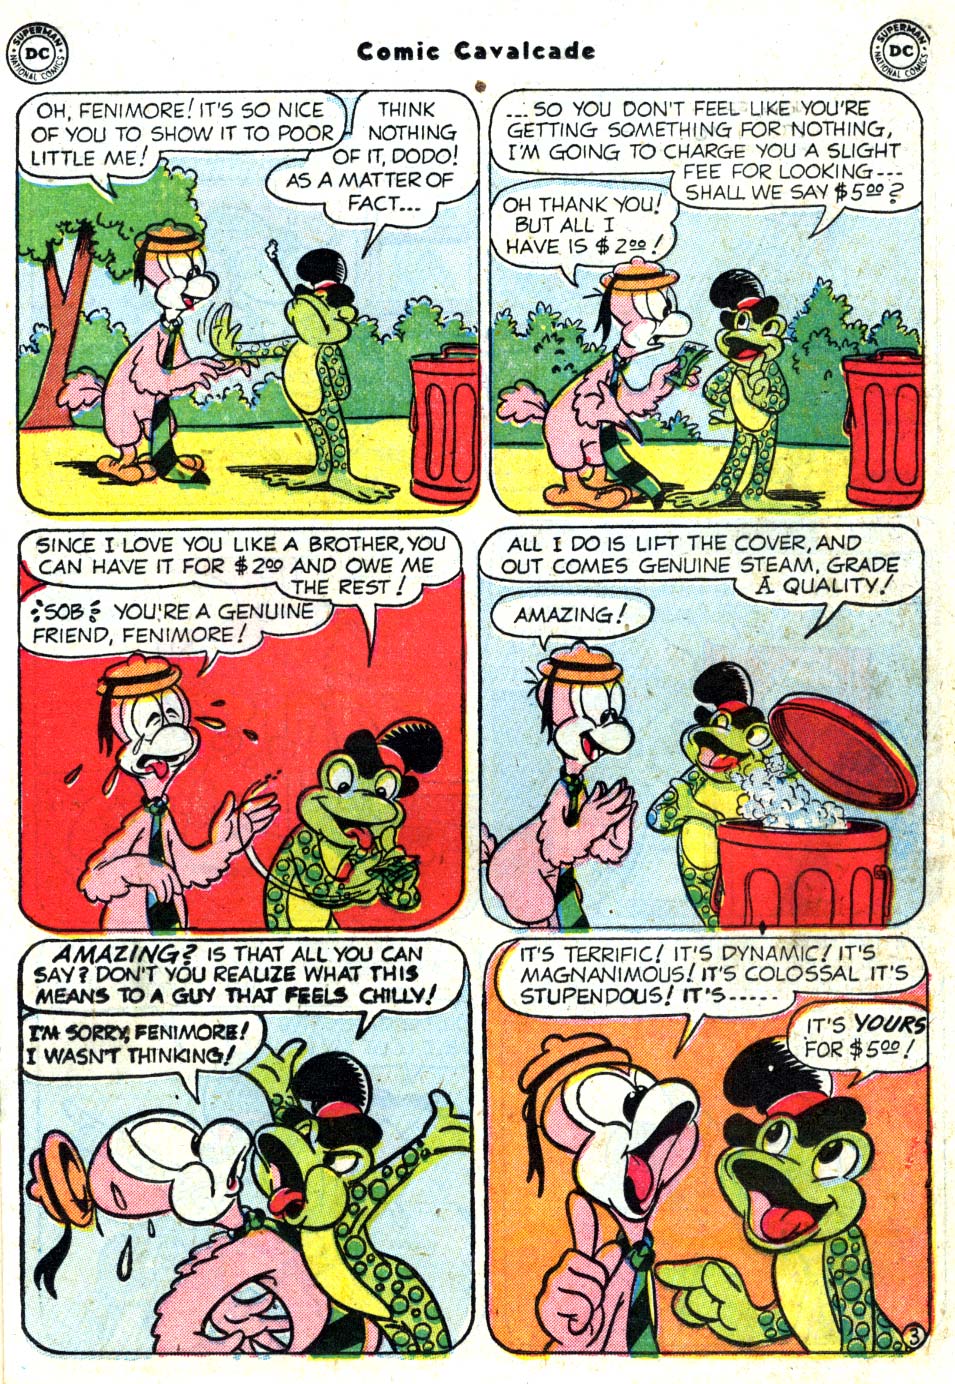 Comic Cavalcade issue 46 - Page 35